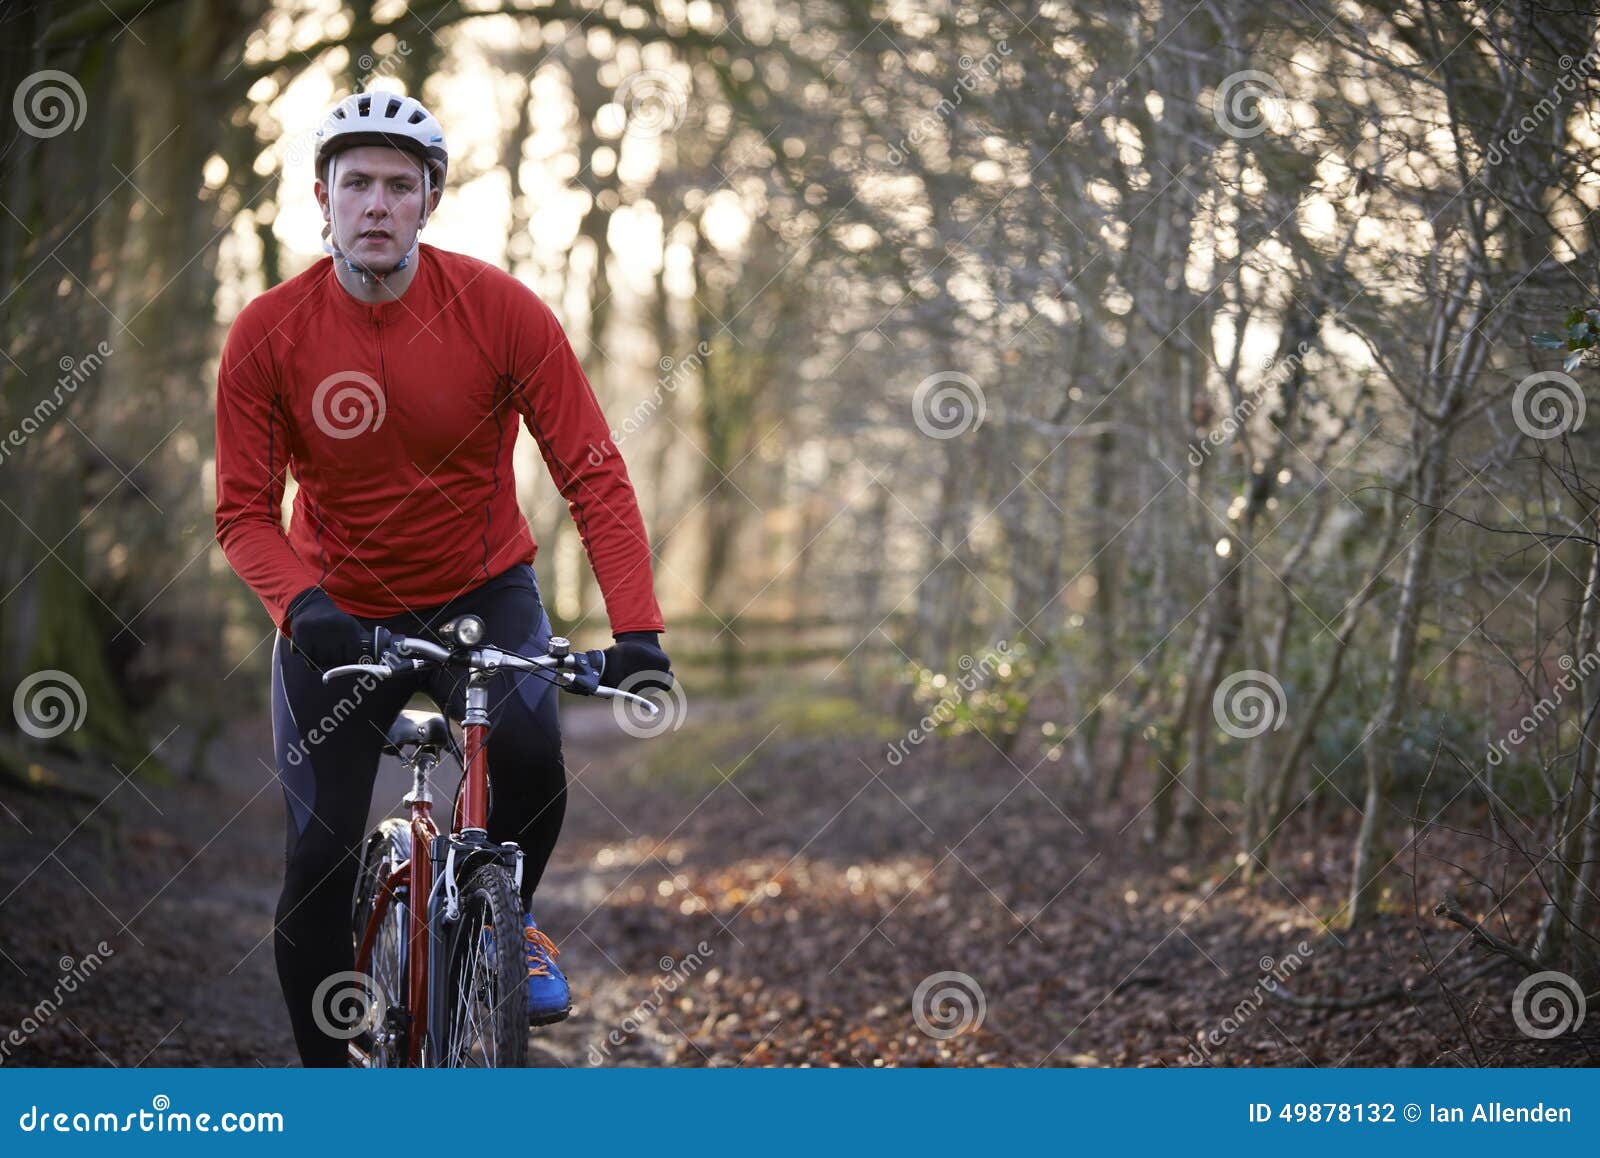 man riding mountain bike through woodlands